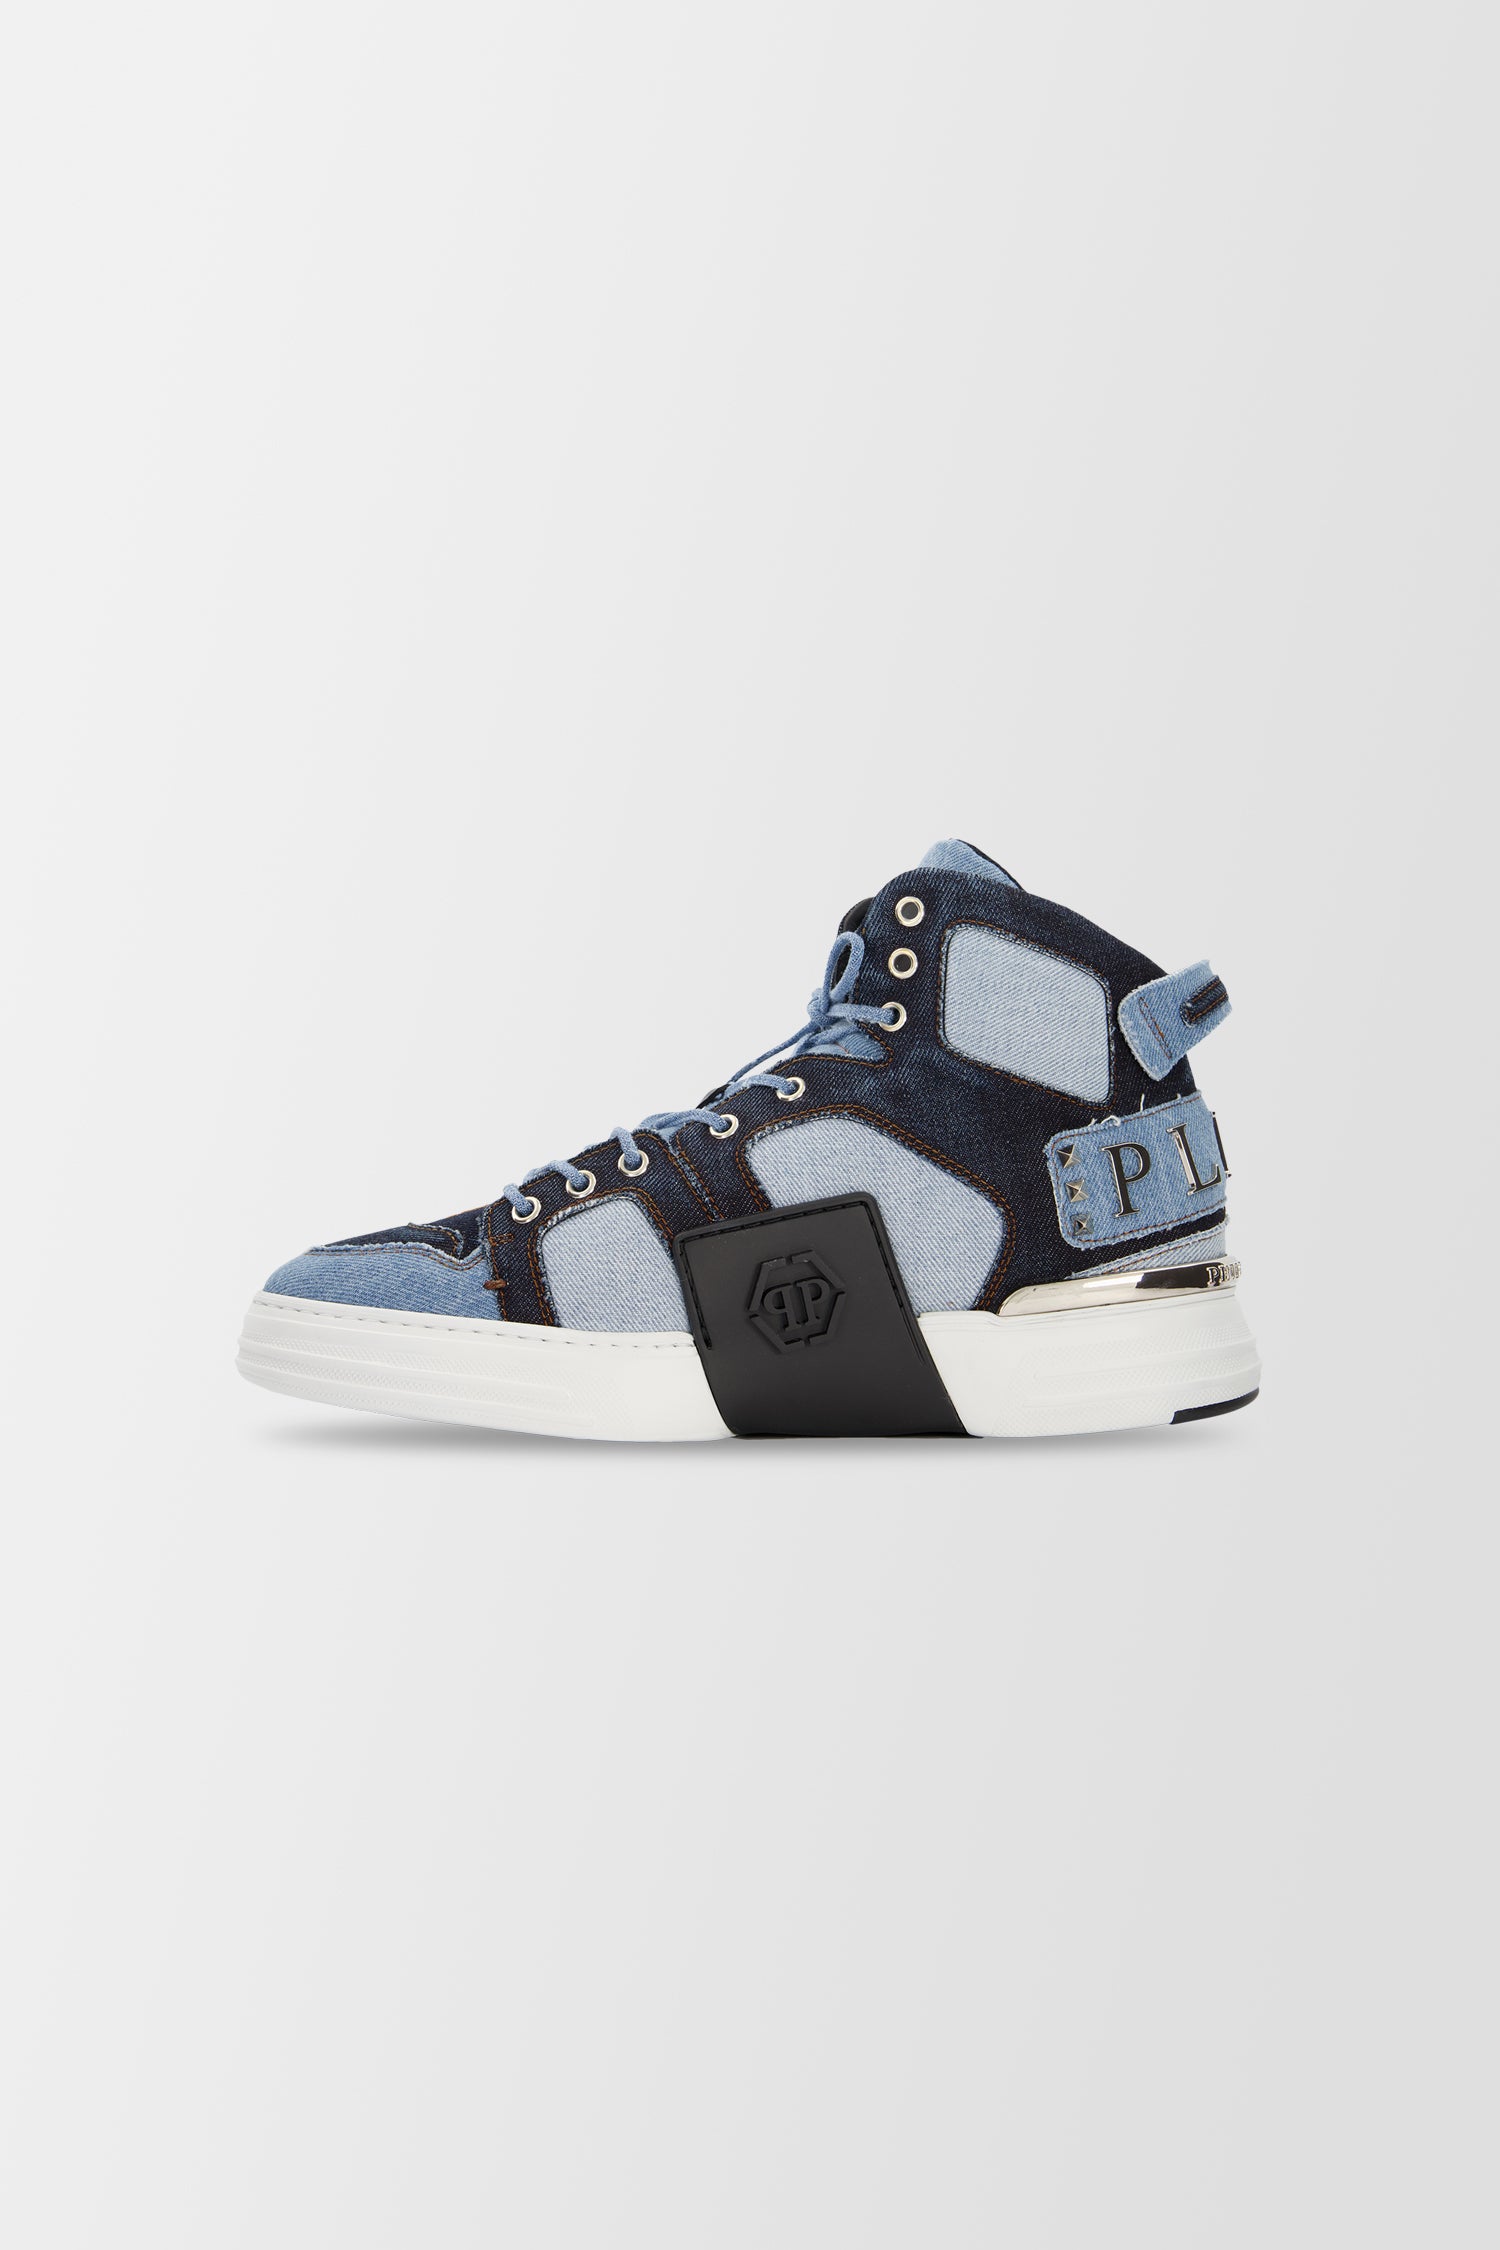 Philipp Plein PHANTOM KICK$ Blue Sneakers